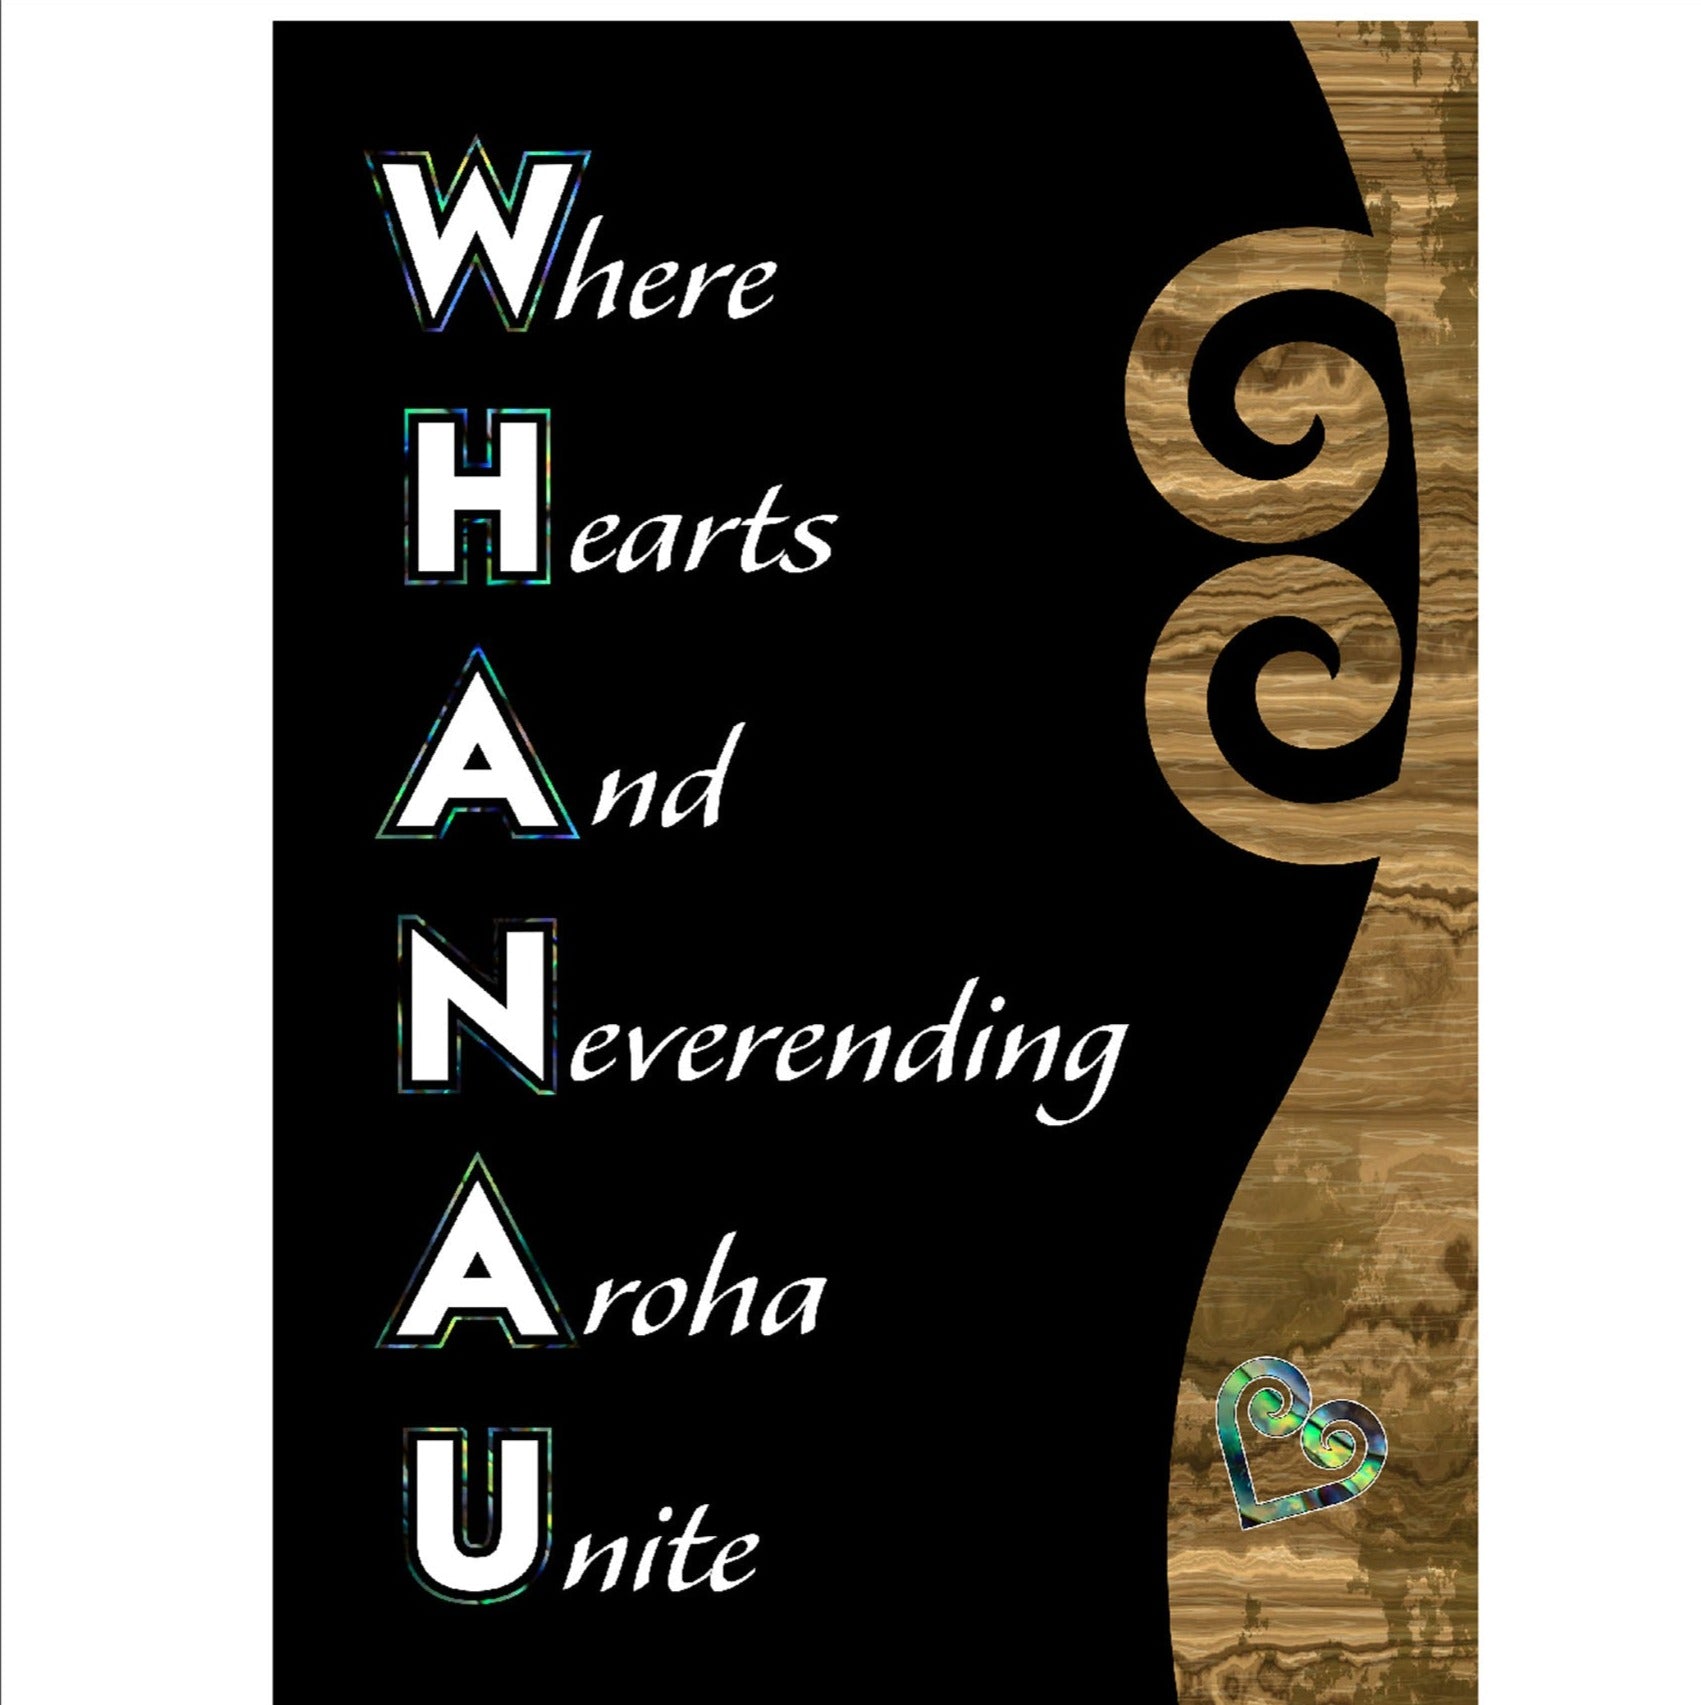 Whanau Maori A3 canvas print ready for framing with wood look koru and black background